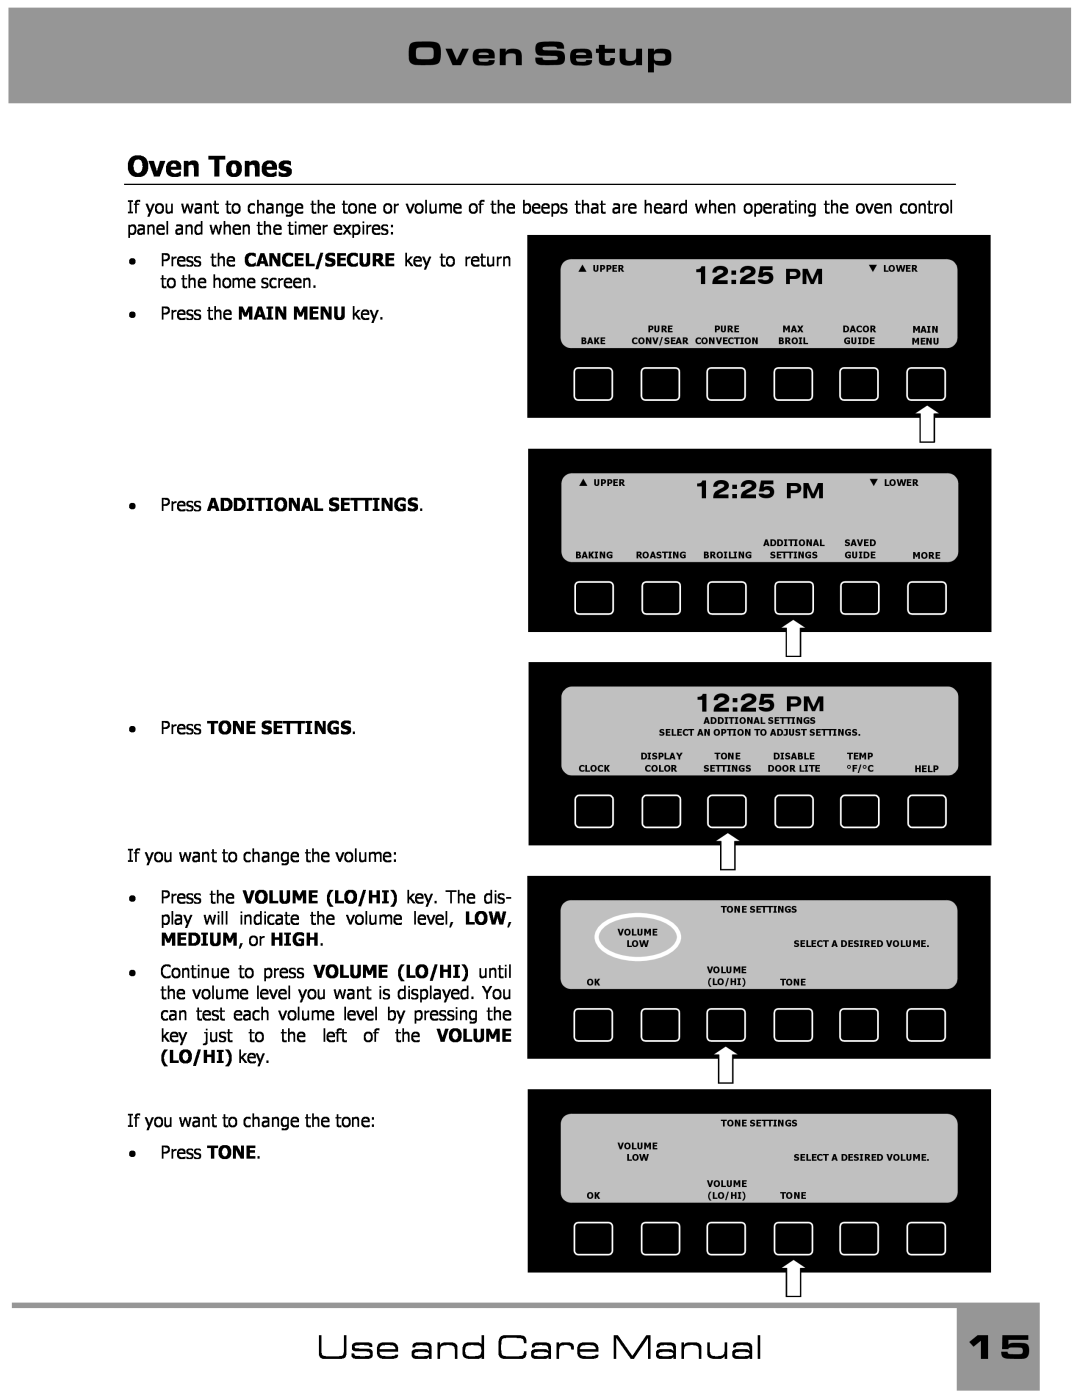 Dacor Wall Oven manual Oven Tones, Oven Setup, Use and Care Manual, 1225 PM, Press ADDITIONAL SETTINGS, Press TONE SETTINGS 